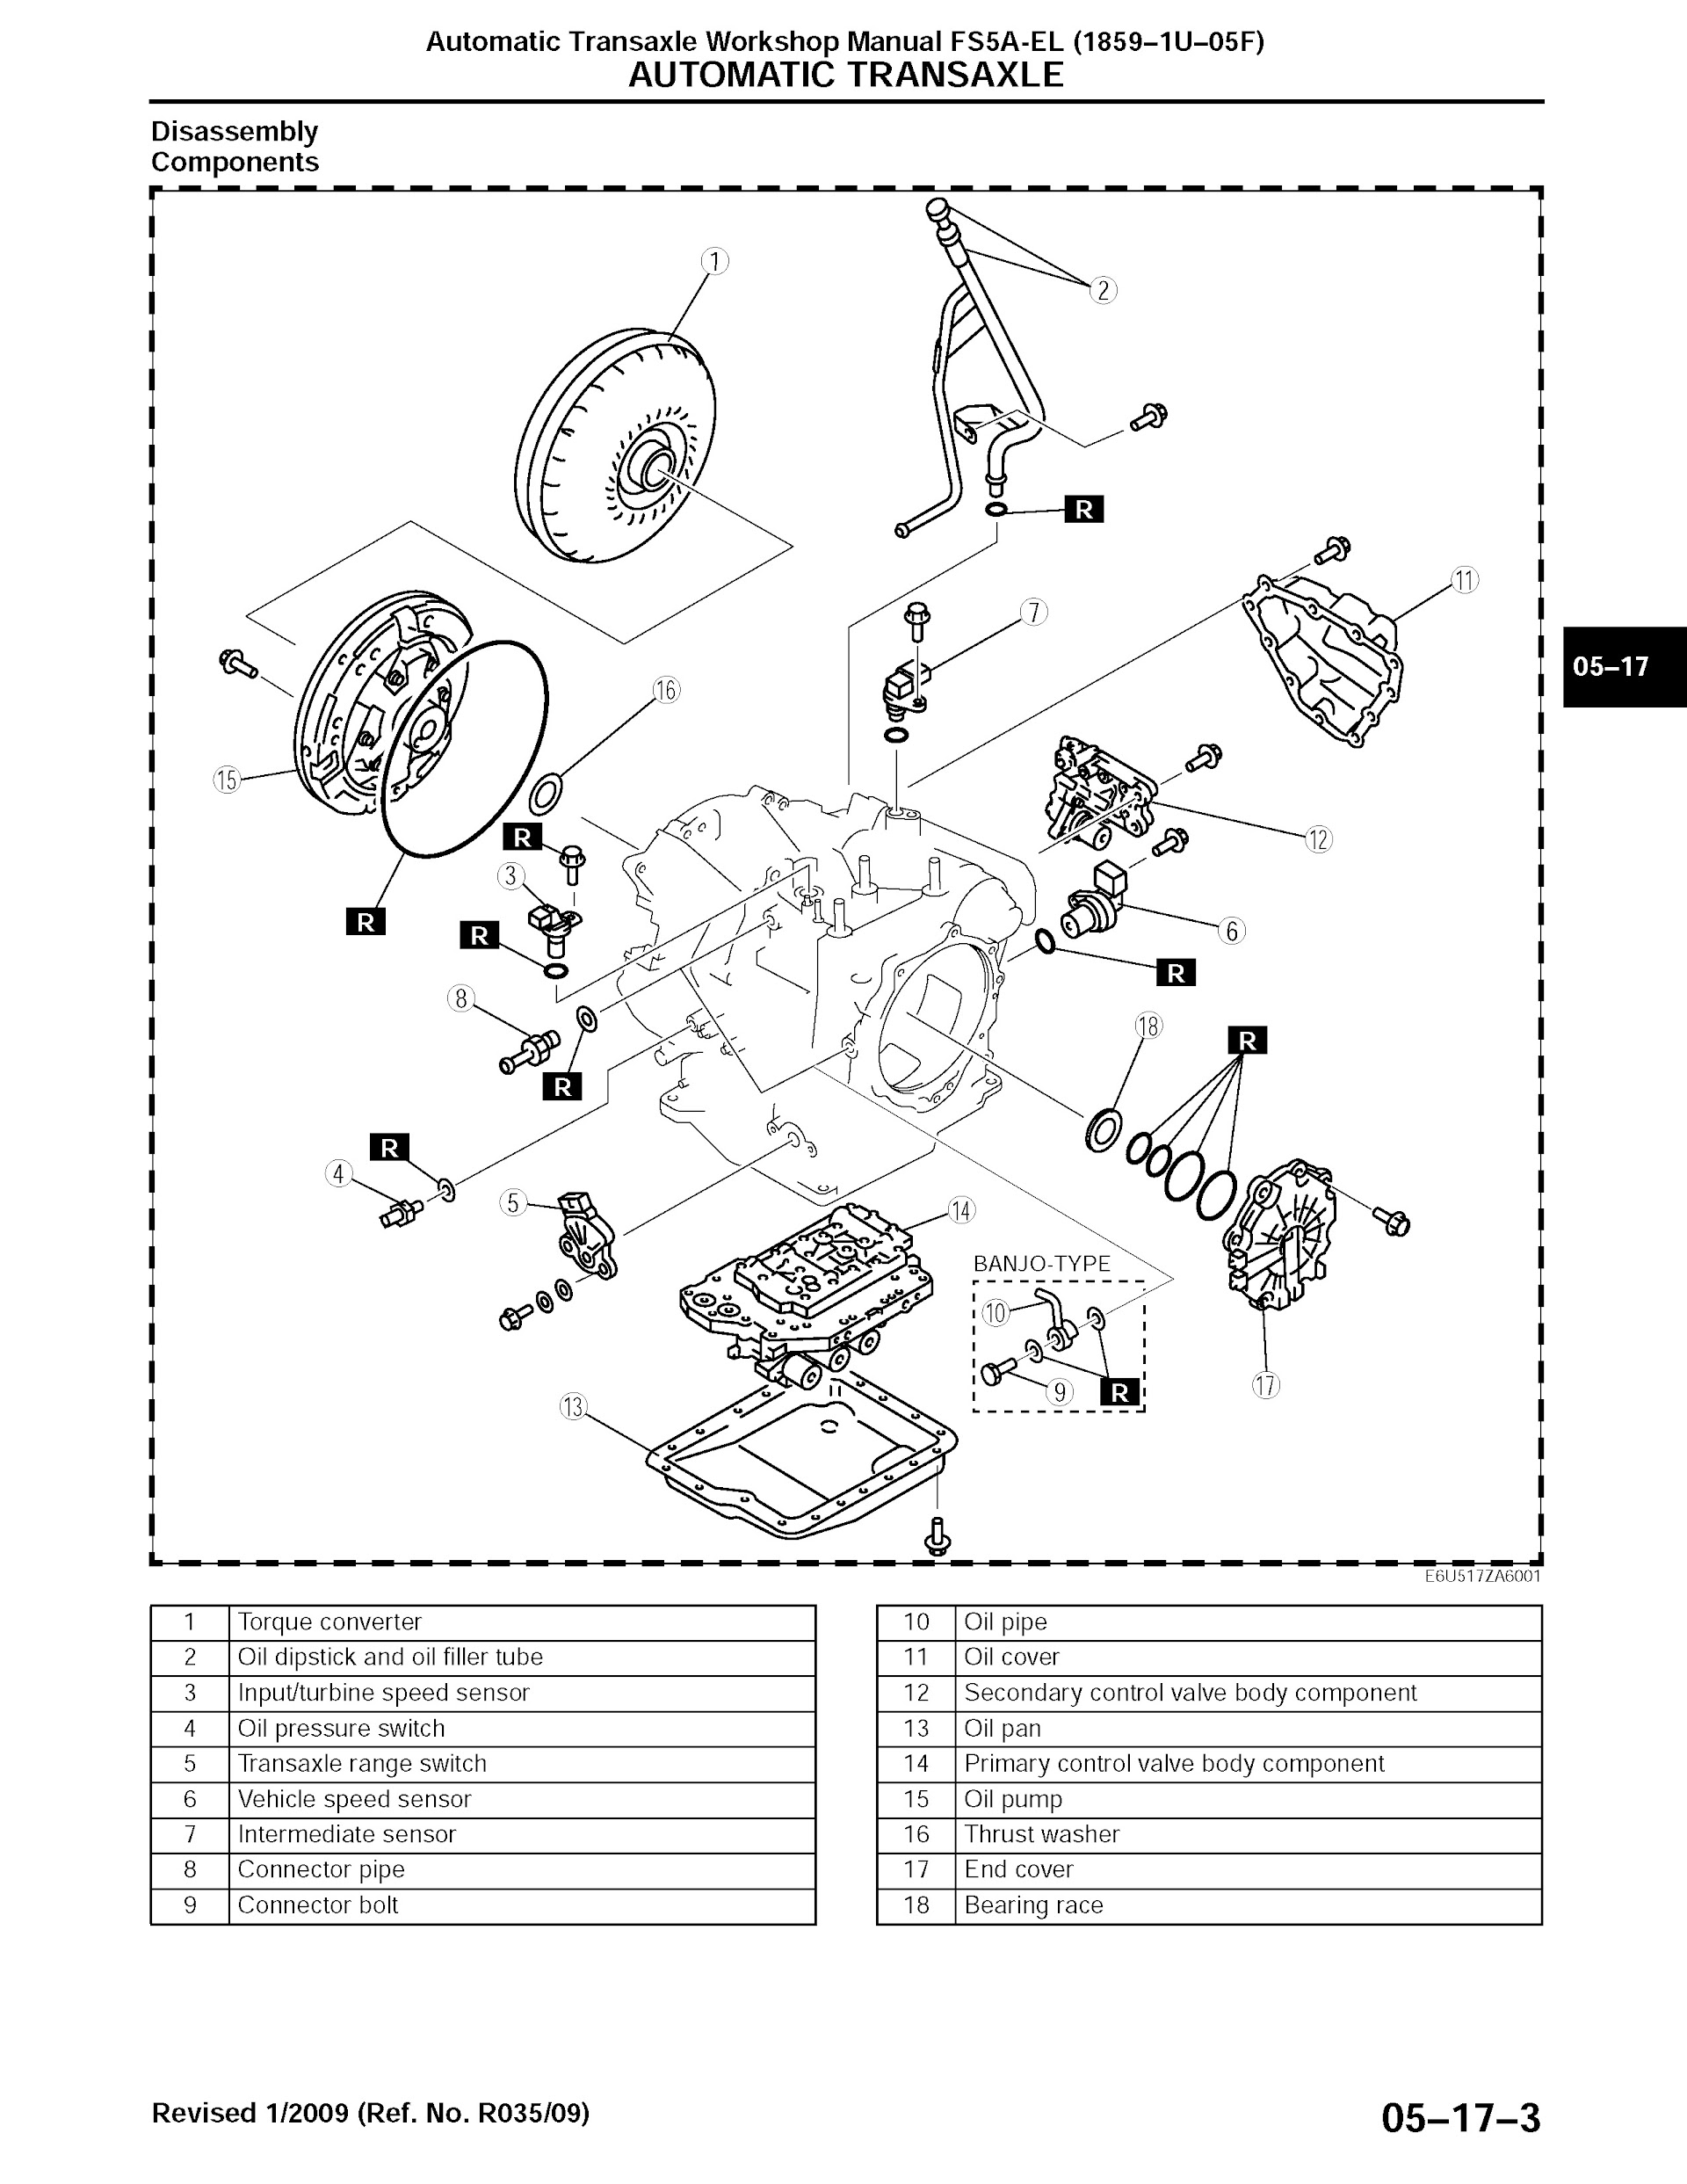 ONTENTS: 2009-2012 Mazda 6 Repair Manual, Automatic Transaxle